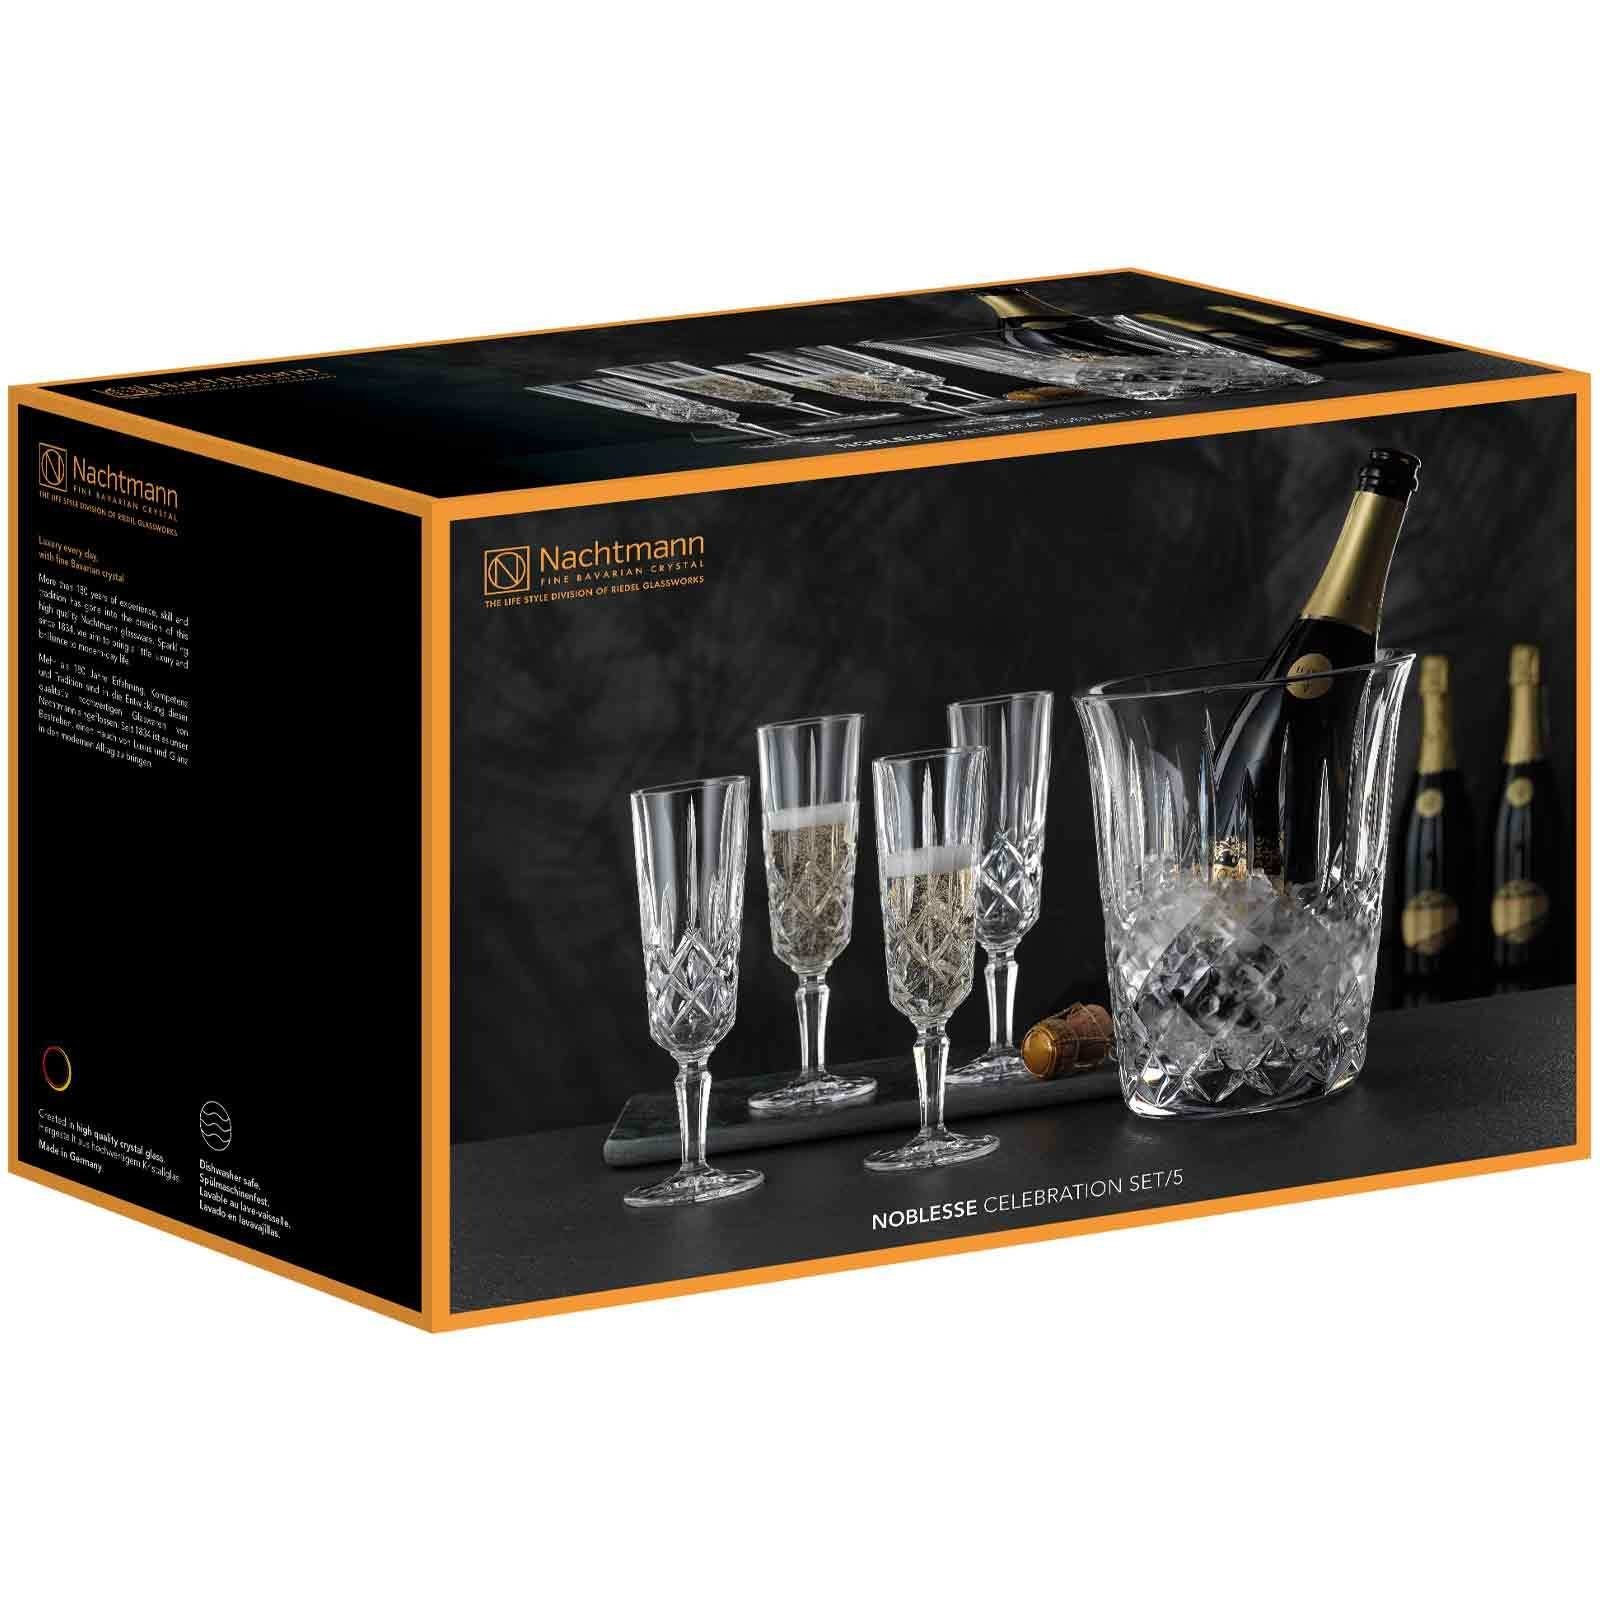 Celebration Glas Noblesse Champagnerglas Set, Nachtmann